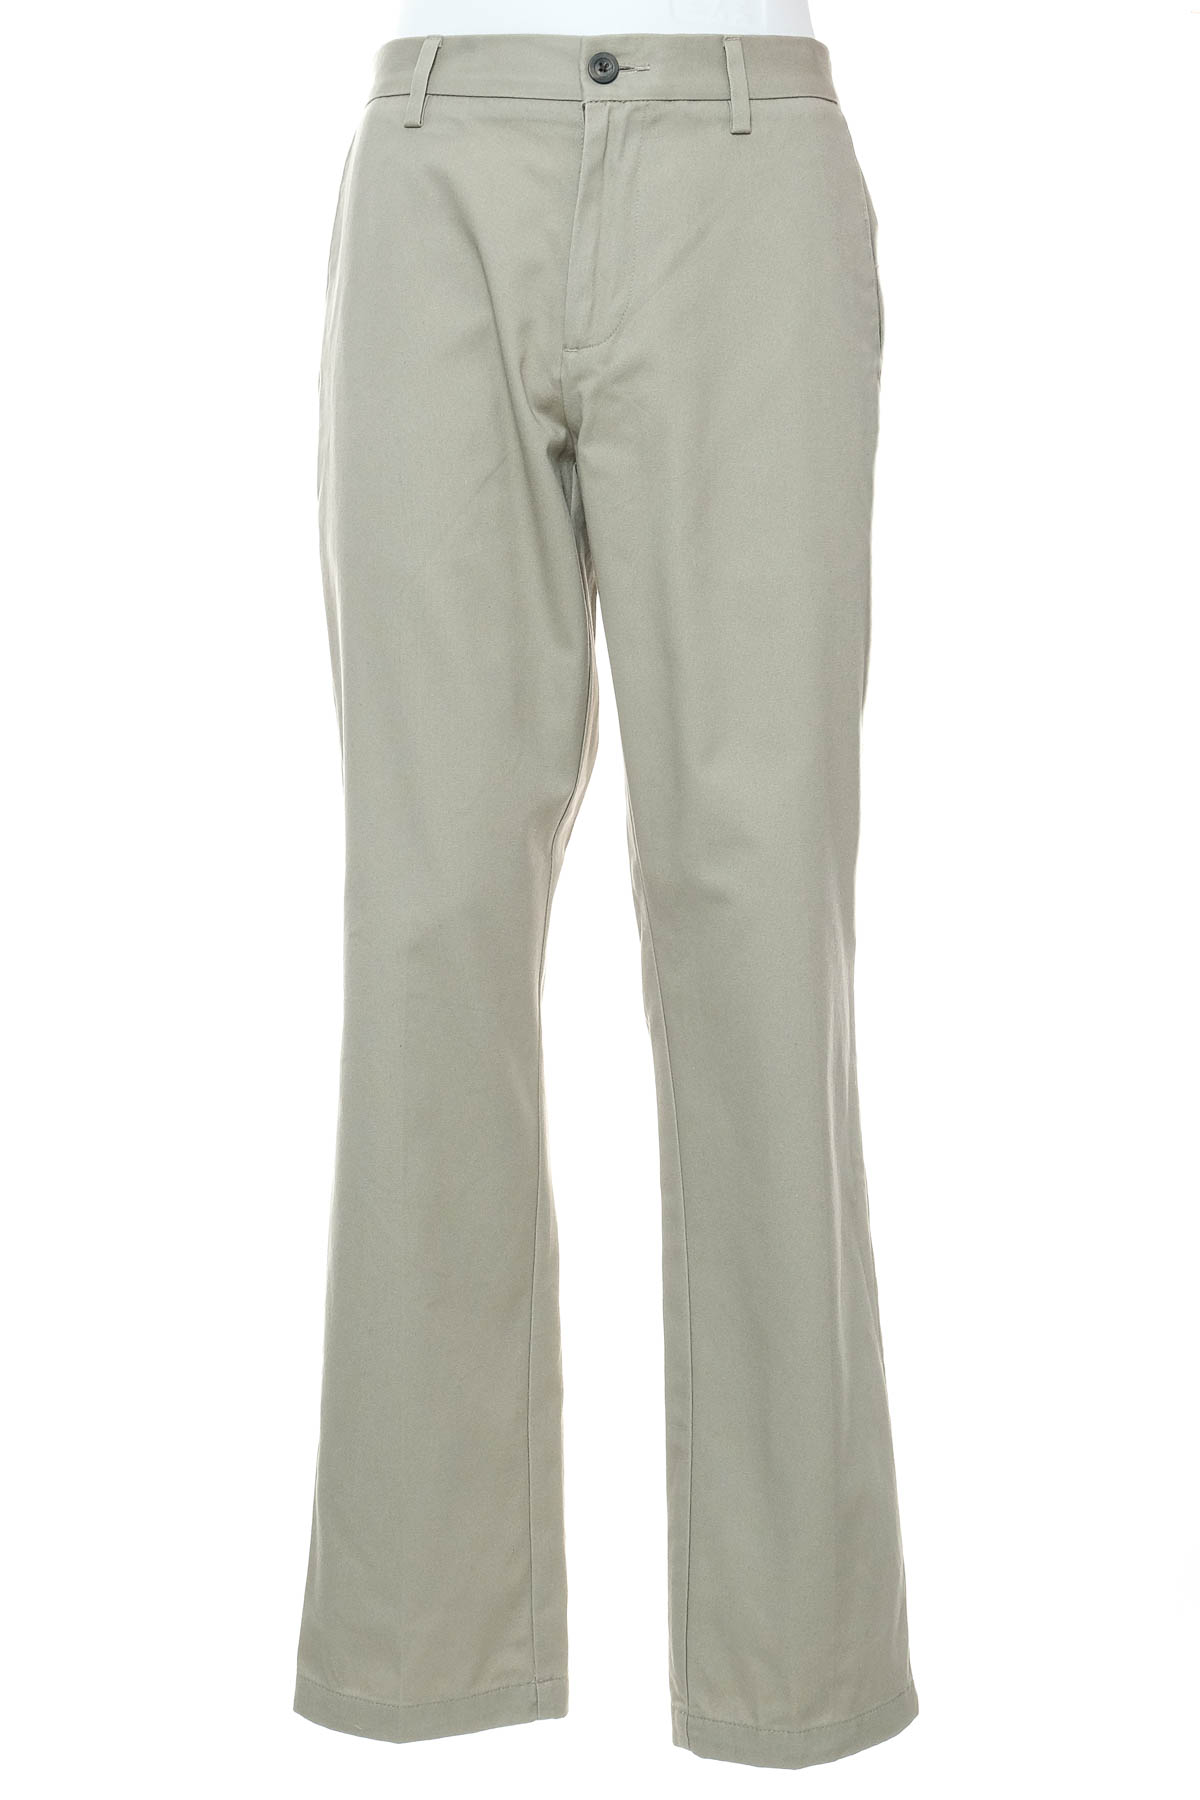 Men's trousers - Amazon essentials - 0